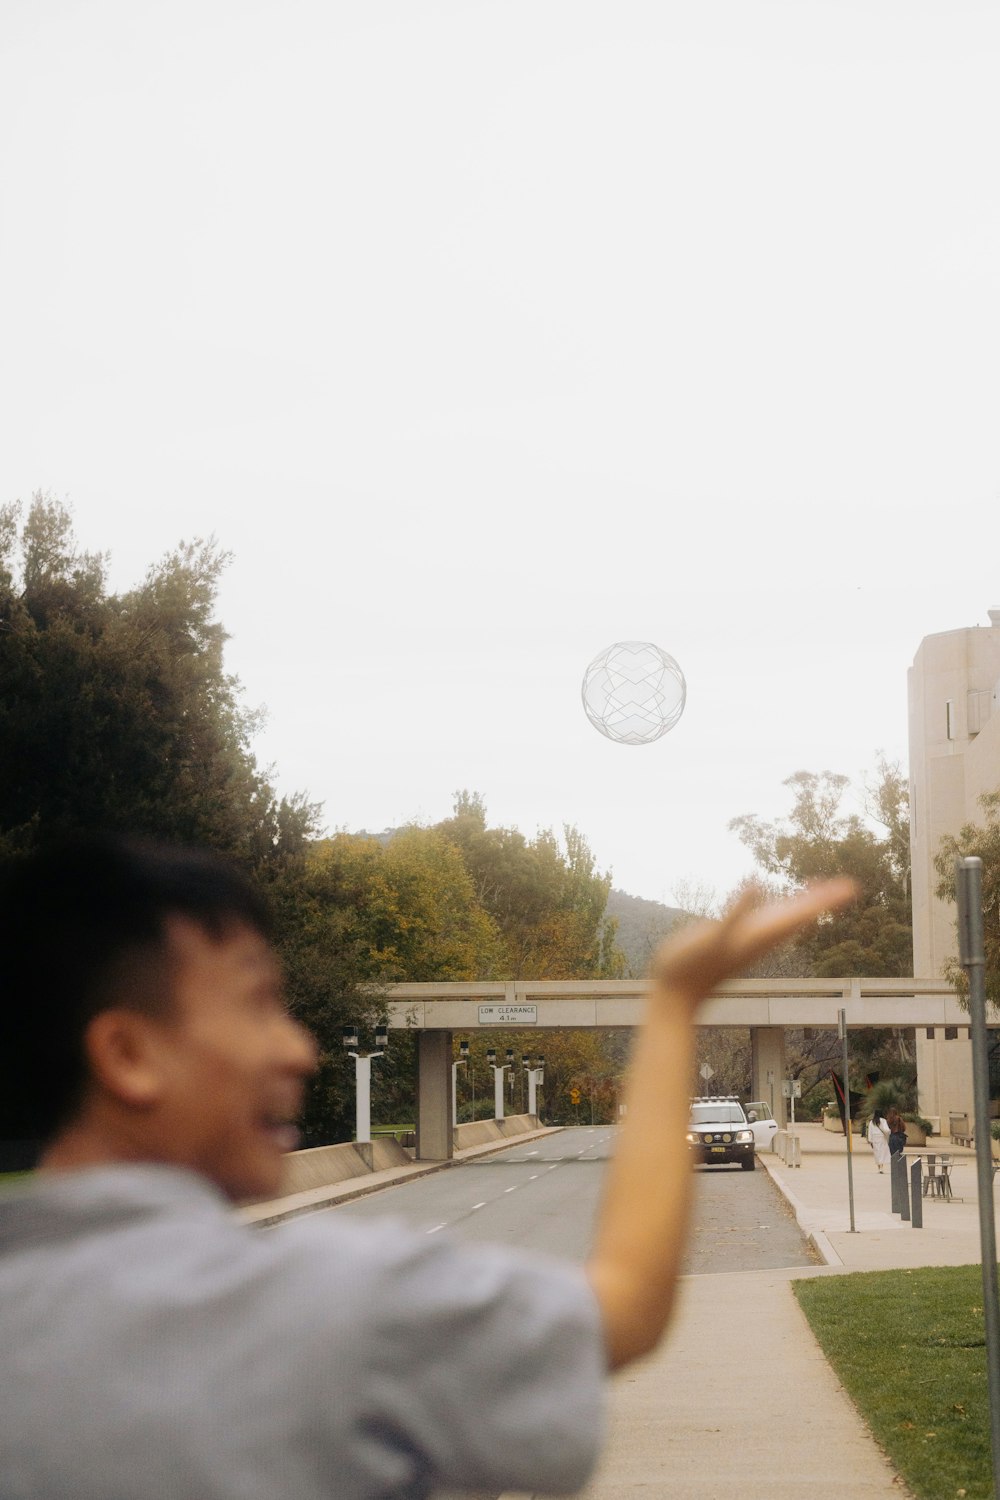 Un uomo sta lanciando un frisbee in aria